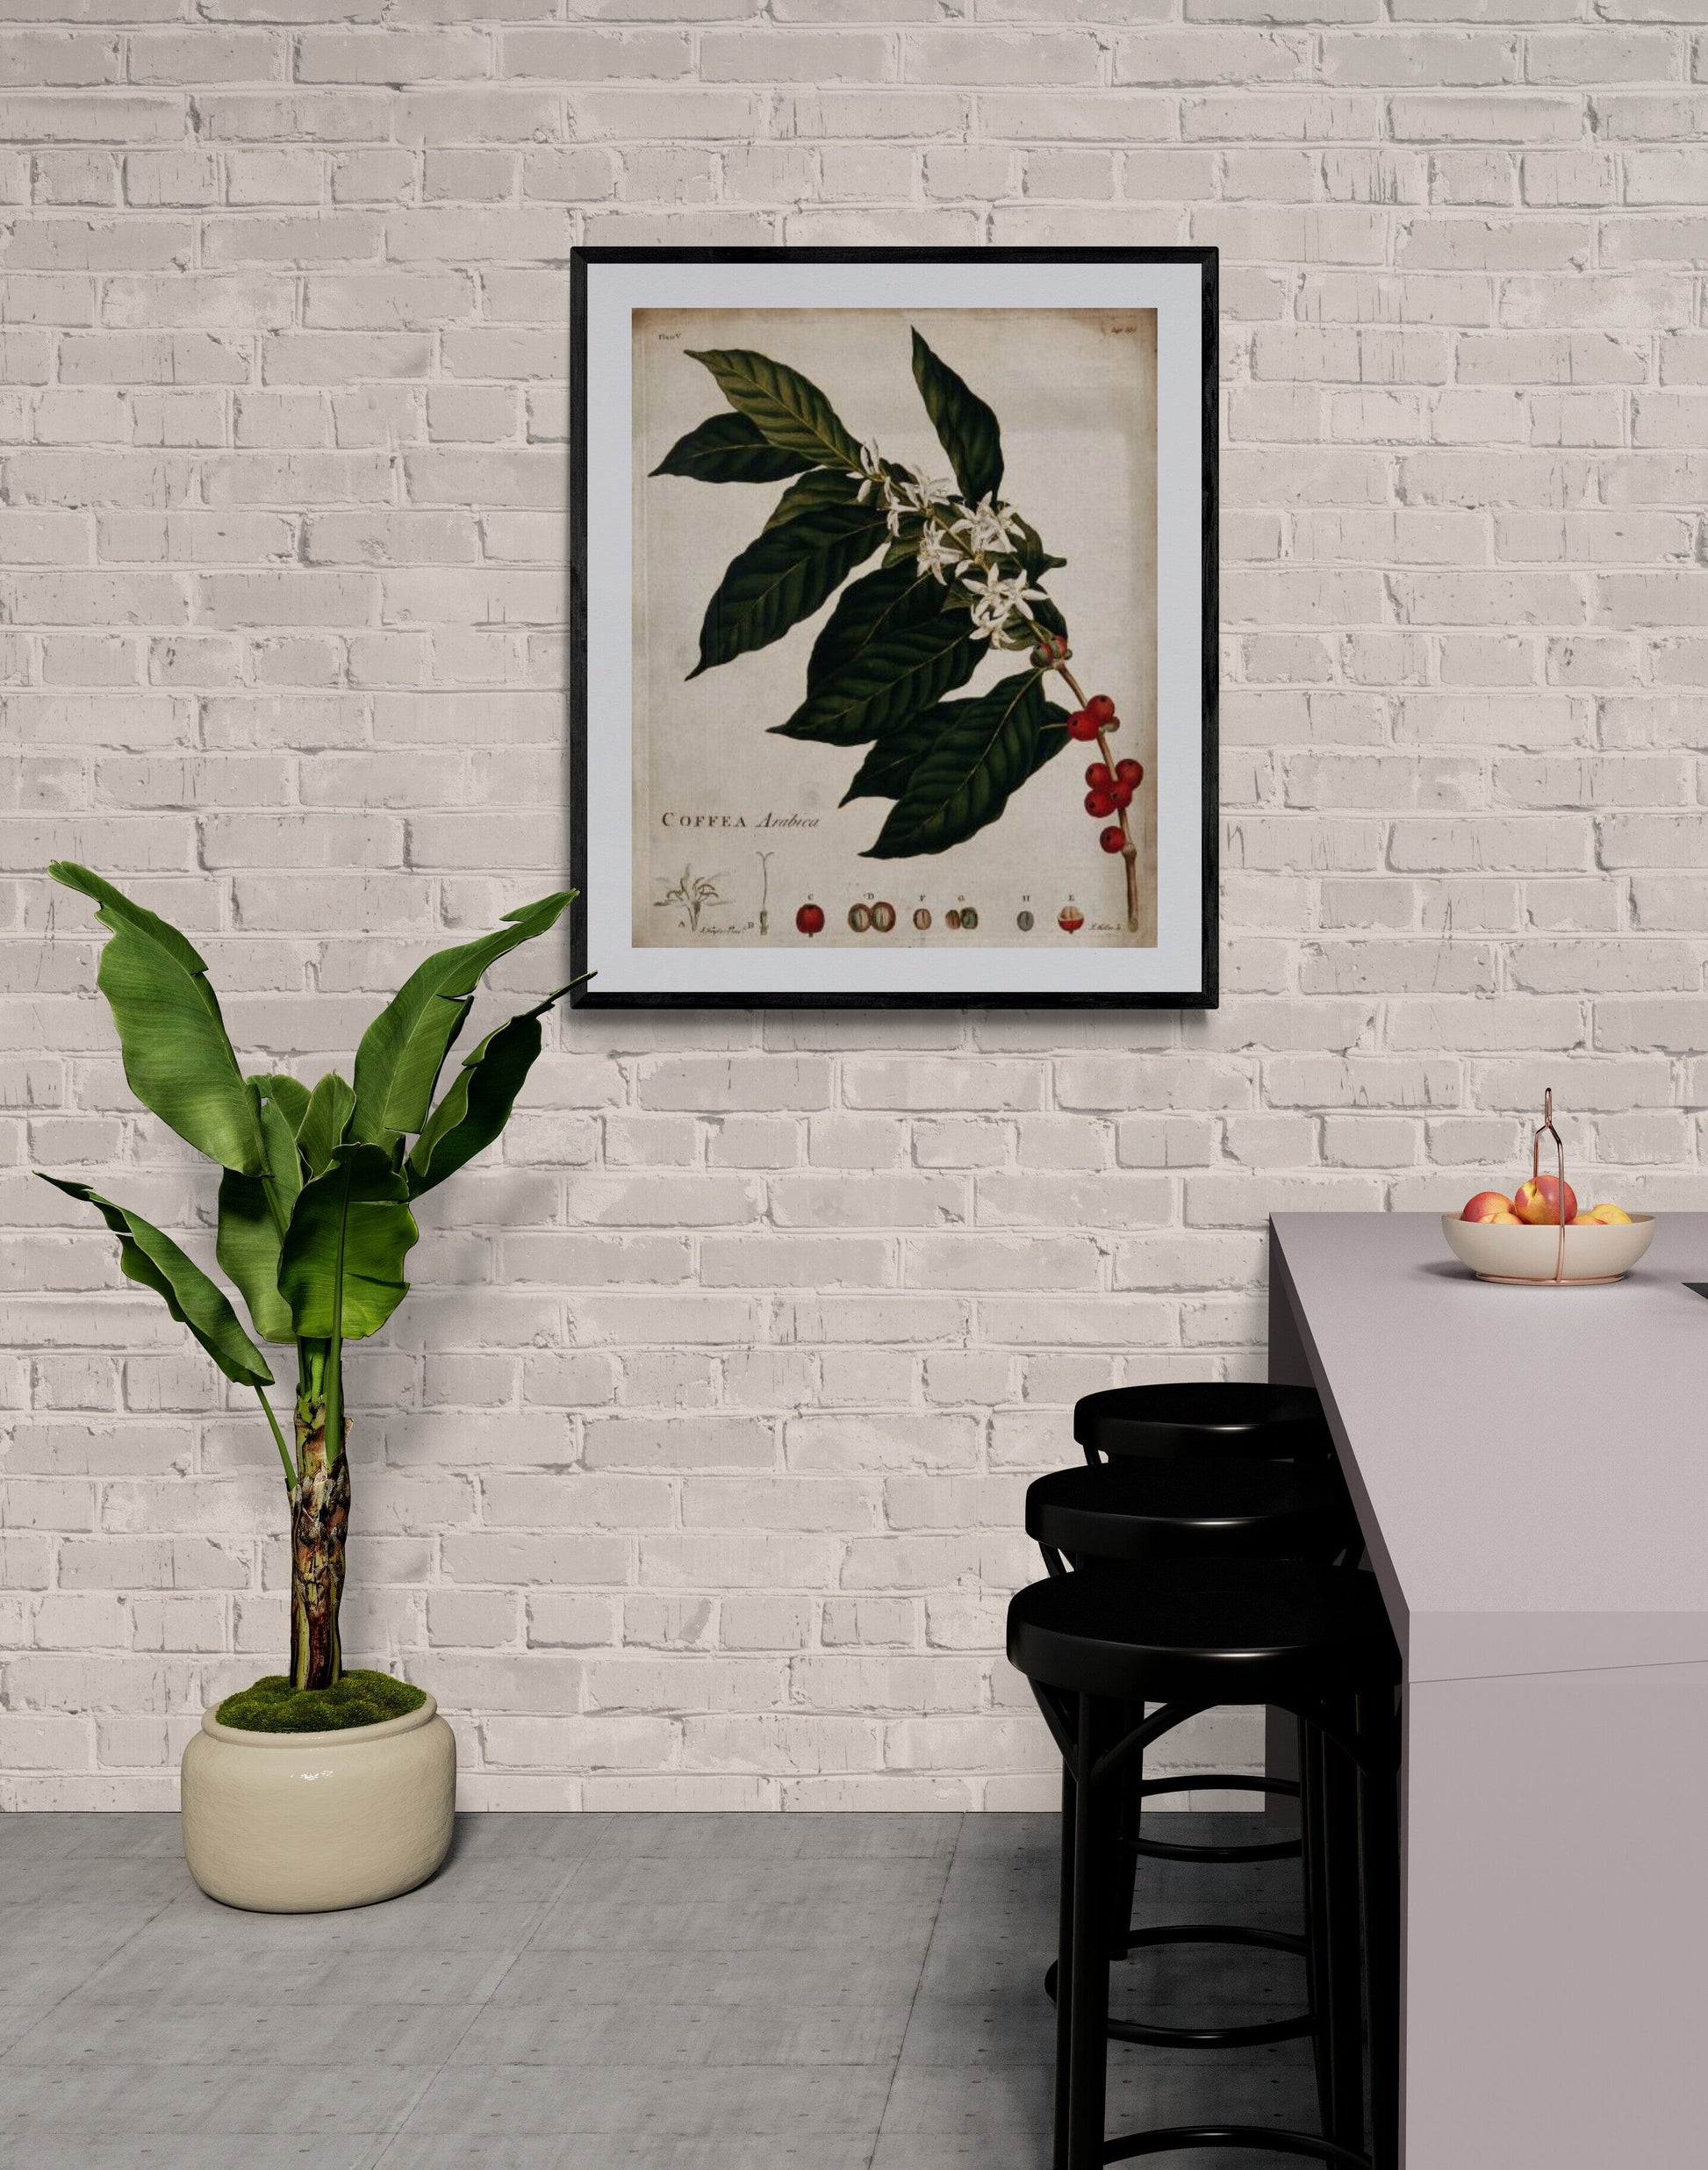 Coffee plant (c1774) | Botanical prints | Kitchen wall art |  J. Miller Posters, Prints, & Visual Artwork The Trumpet Shop   